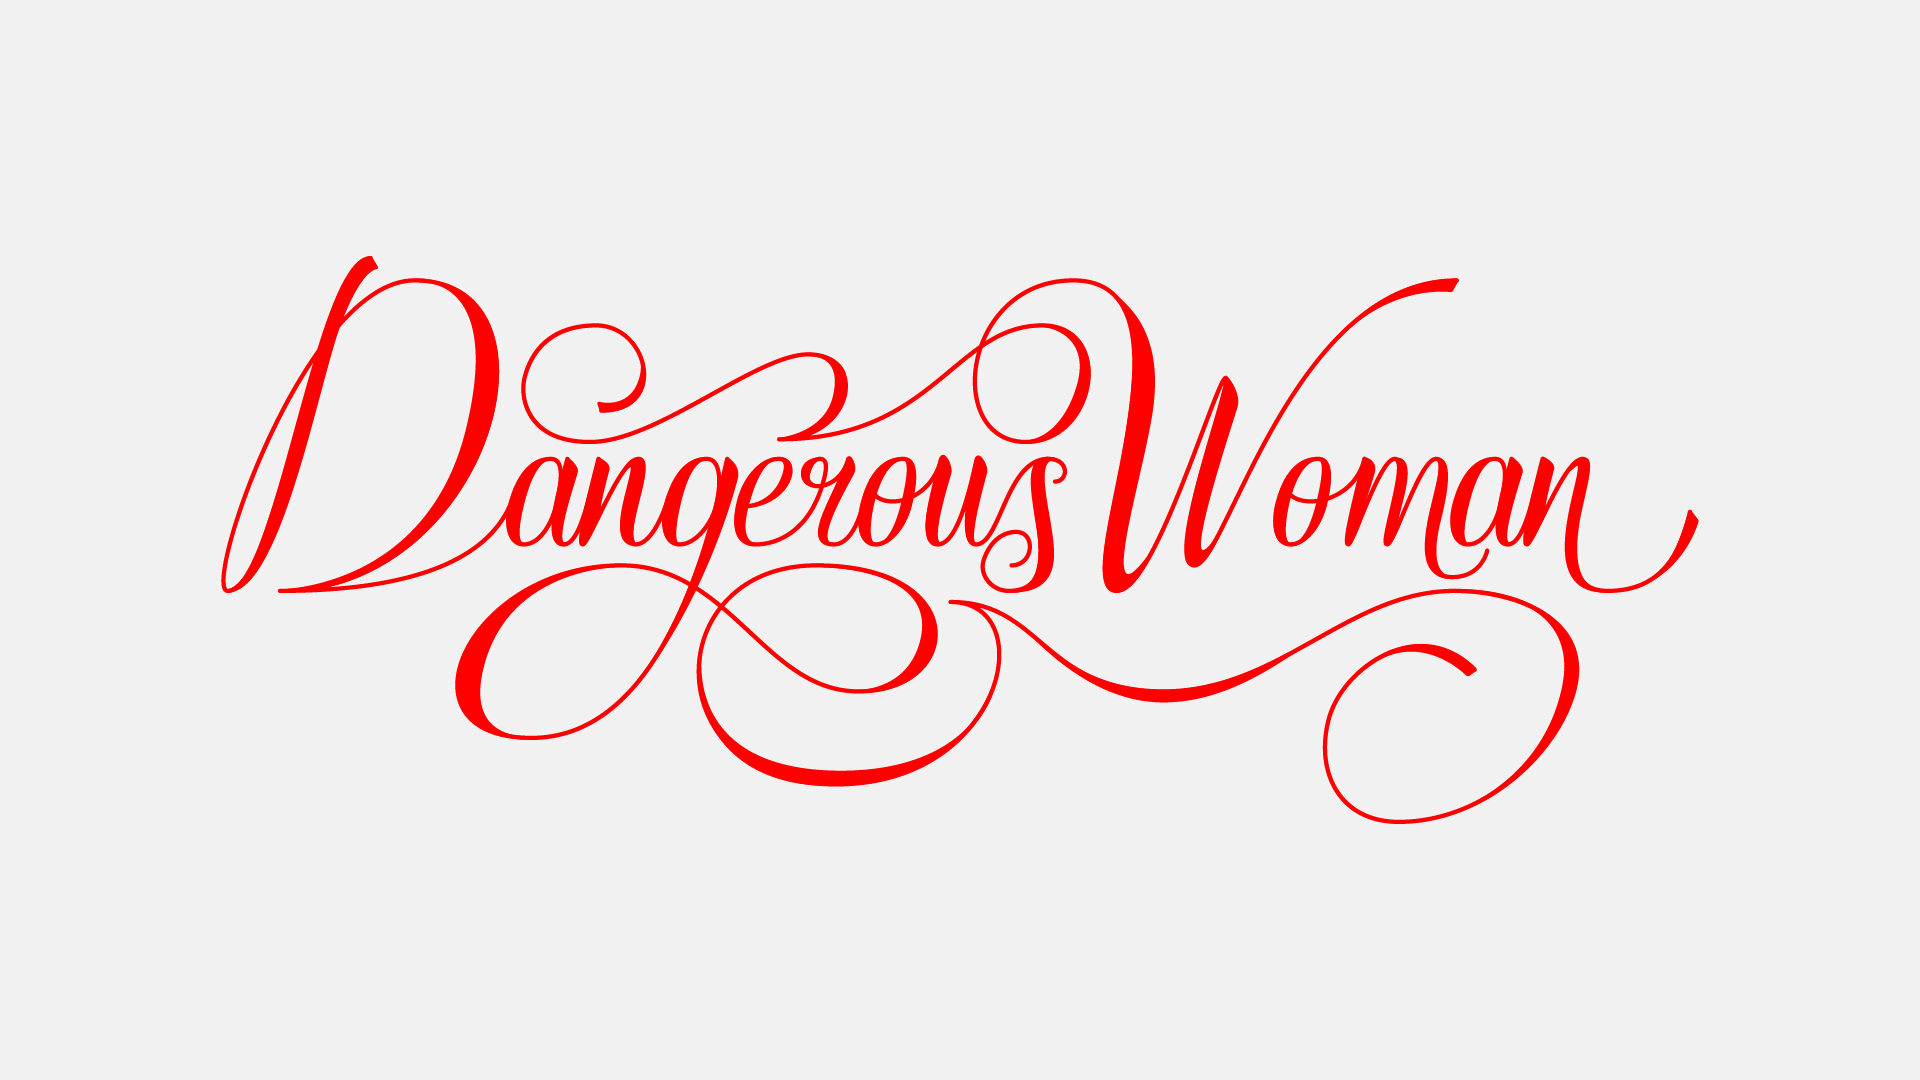 Song01_DangerousWoman_001.png